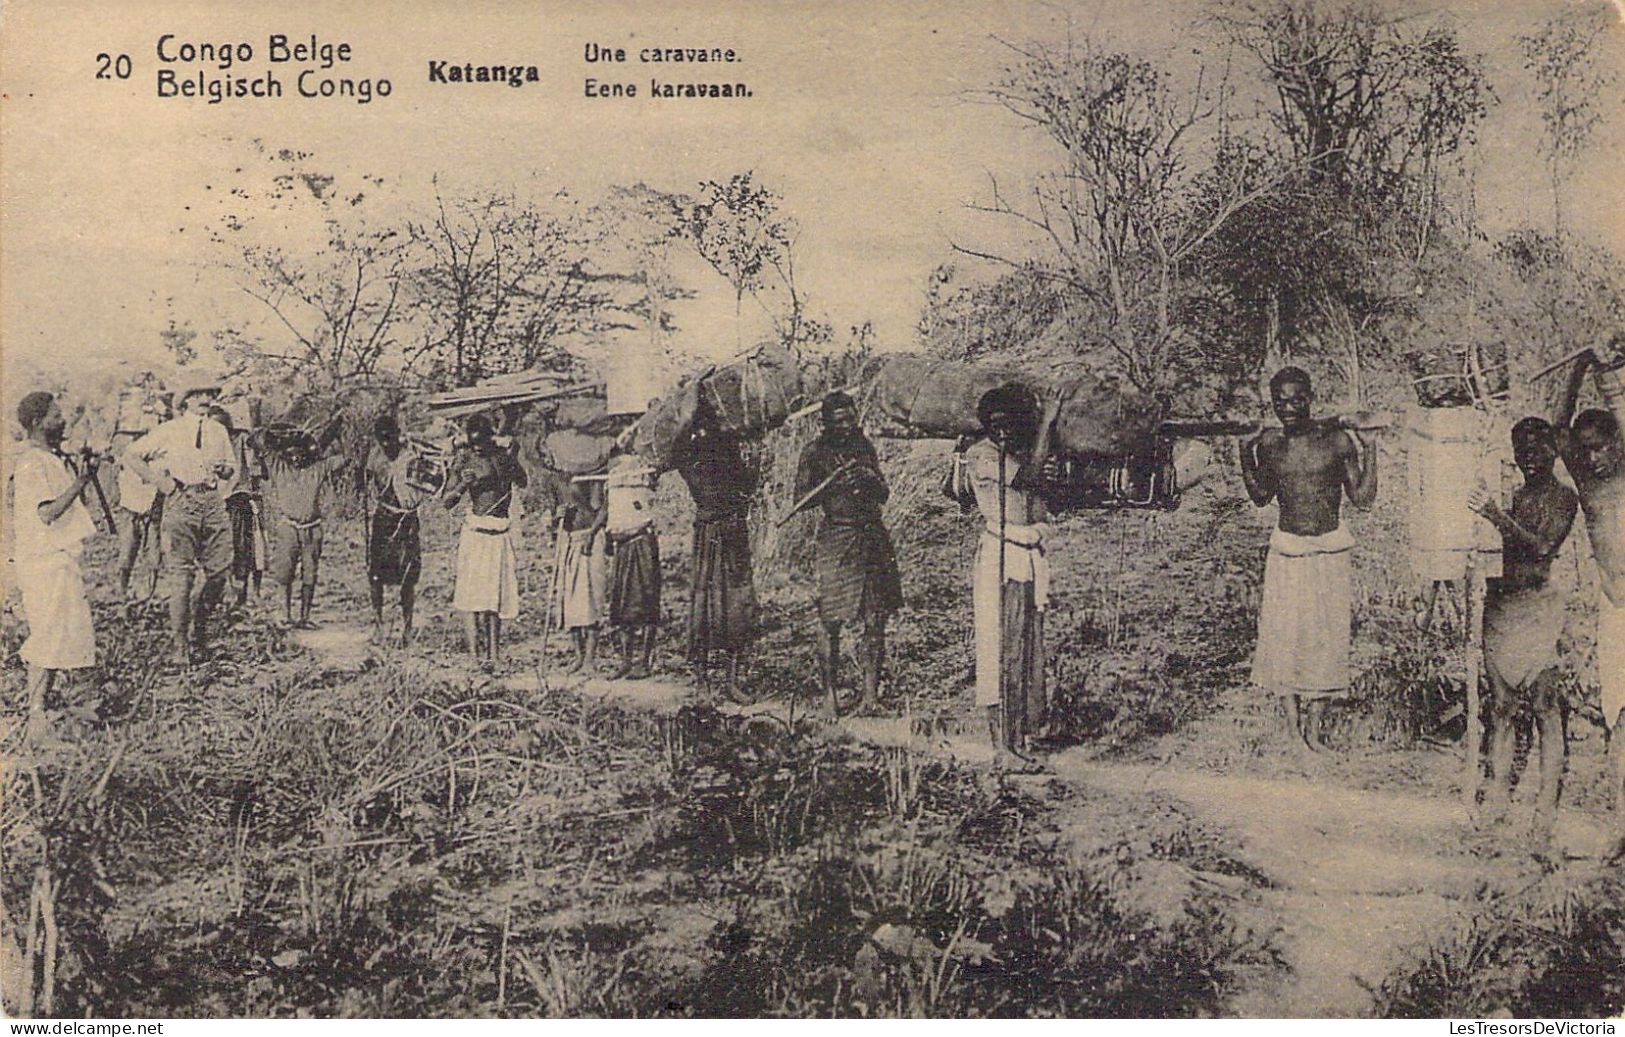 CONGO BELGE - KATANGA - Une Caravane - Carte Postale Ancienne - Congo Belga